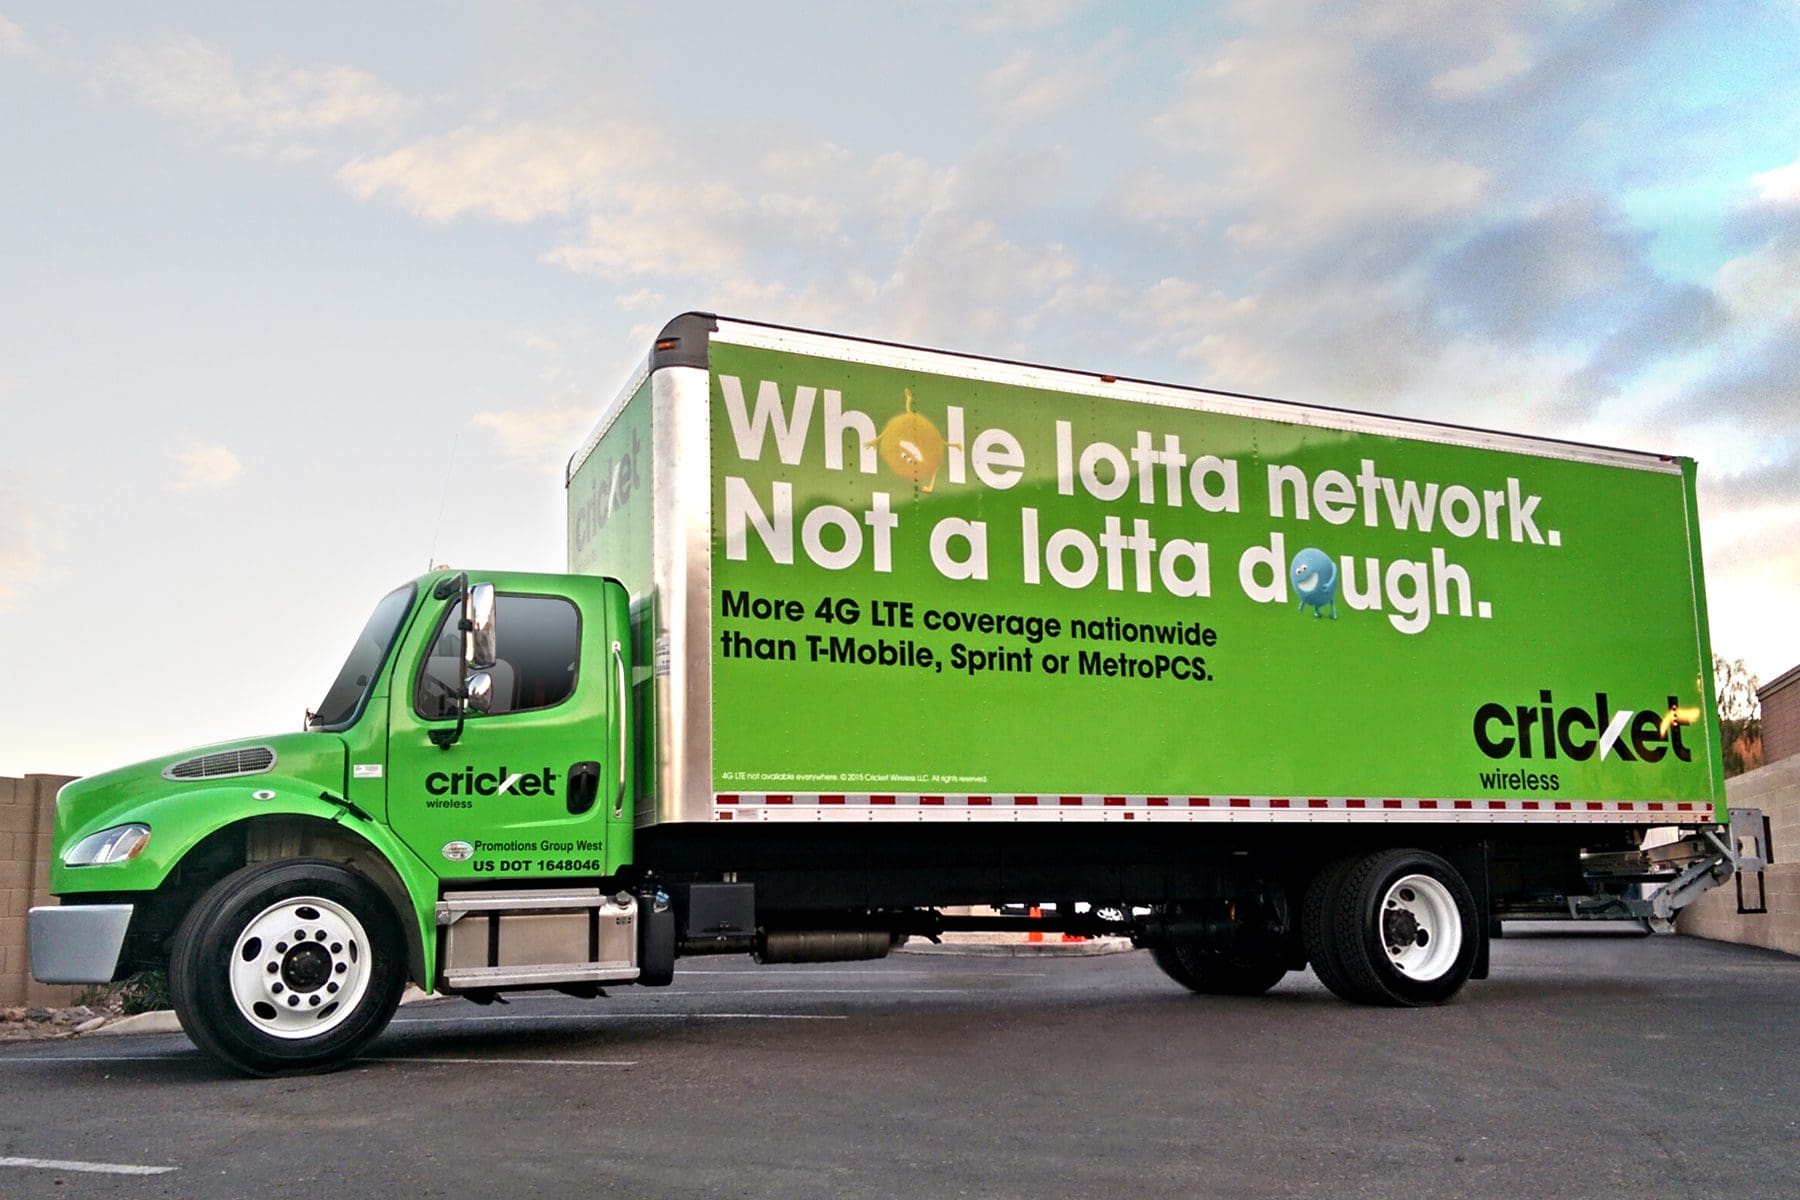 Lime green Vinyl Wrap on a Cricket Wireless fleet truck